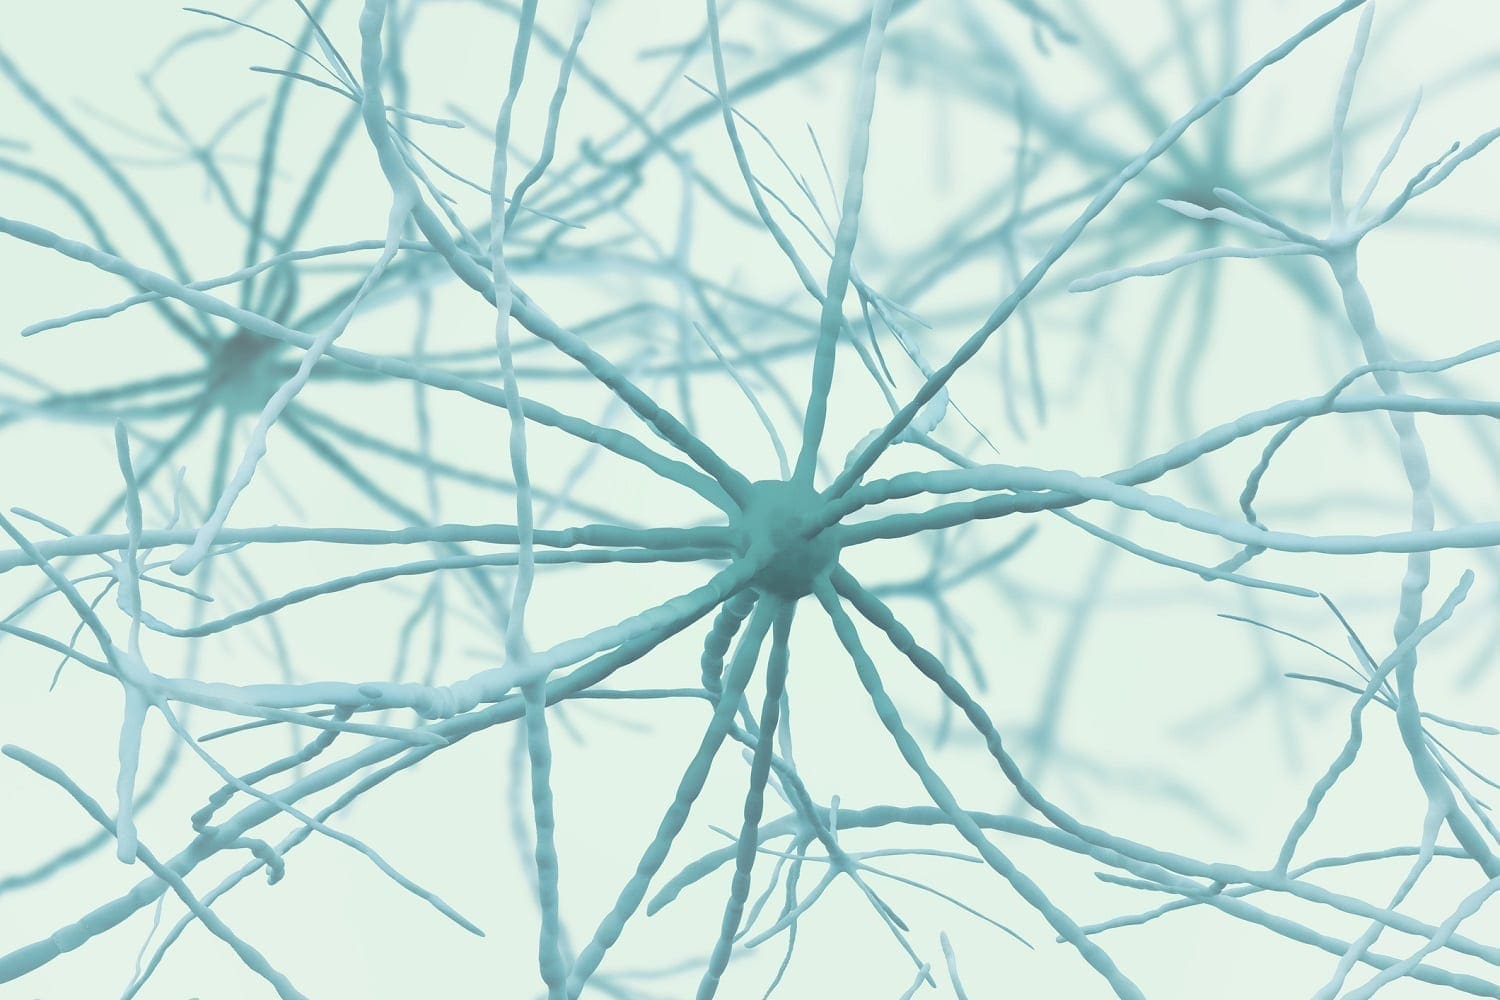 Neurons 3D image: ID 136686190 © Siarhei Yurchanka | Dreamstime.com